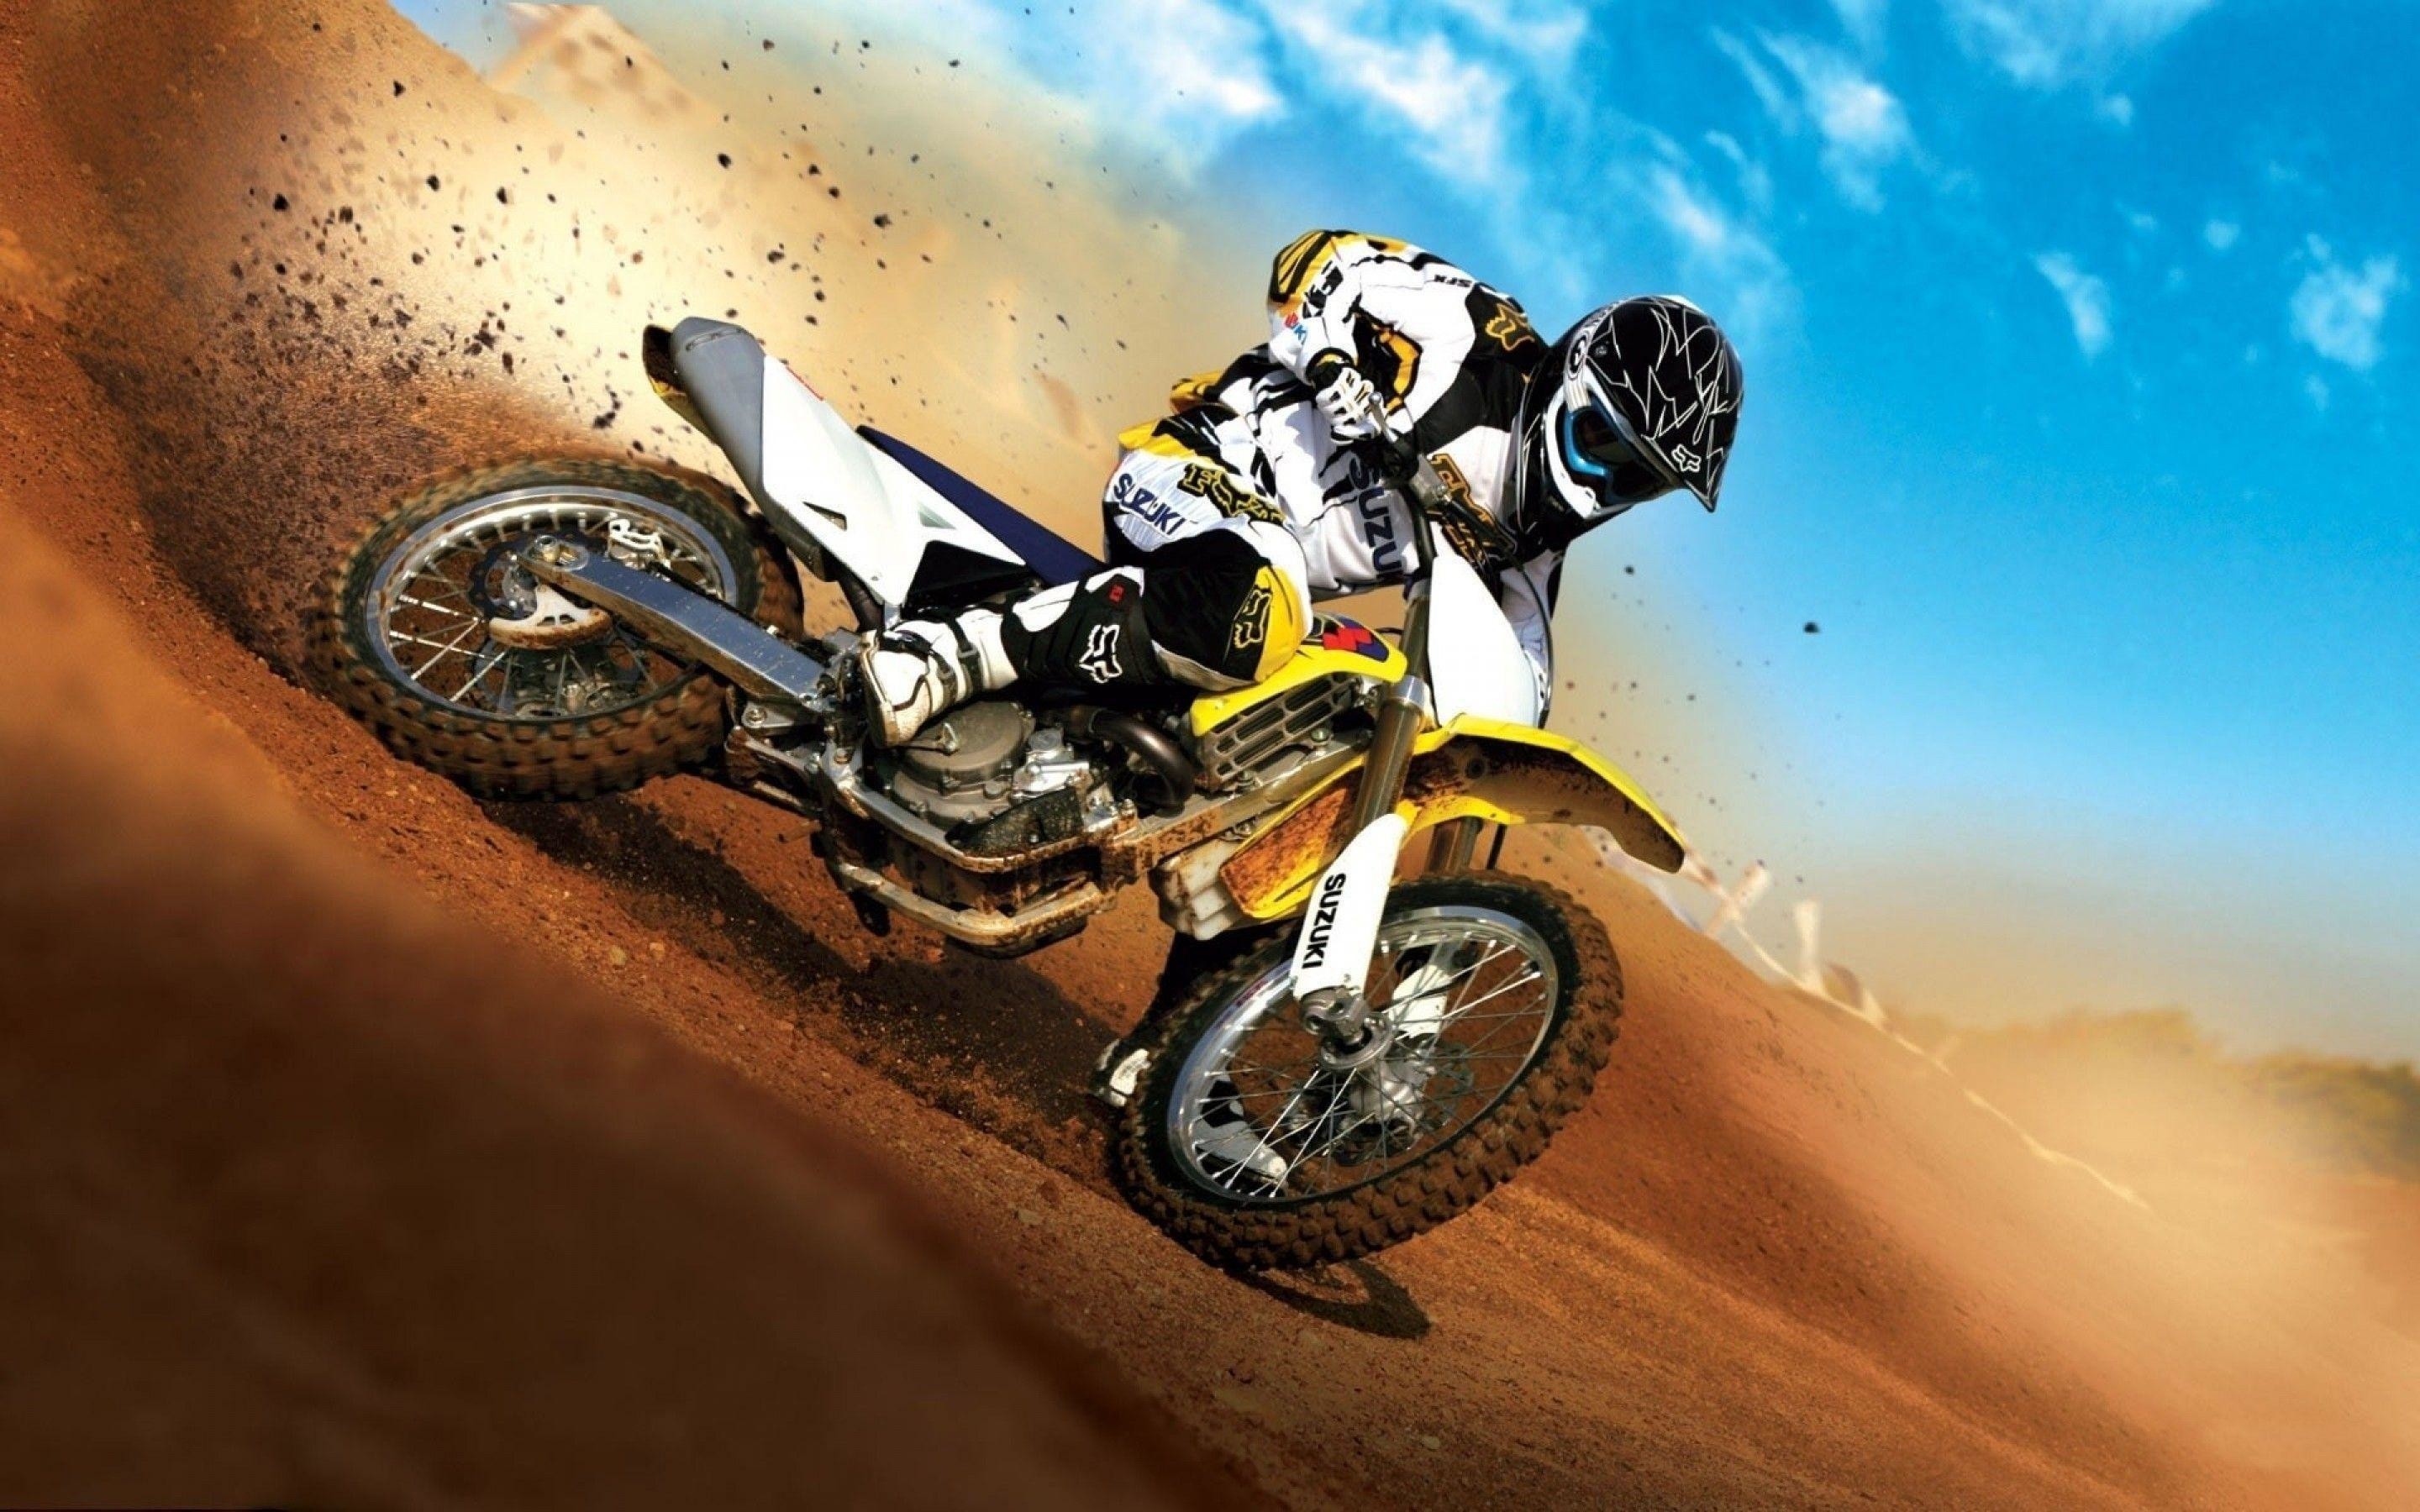 2880x1800 Motocross Wallpapers - Full HD wallpaper search